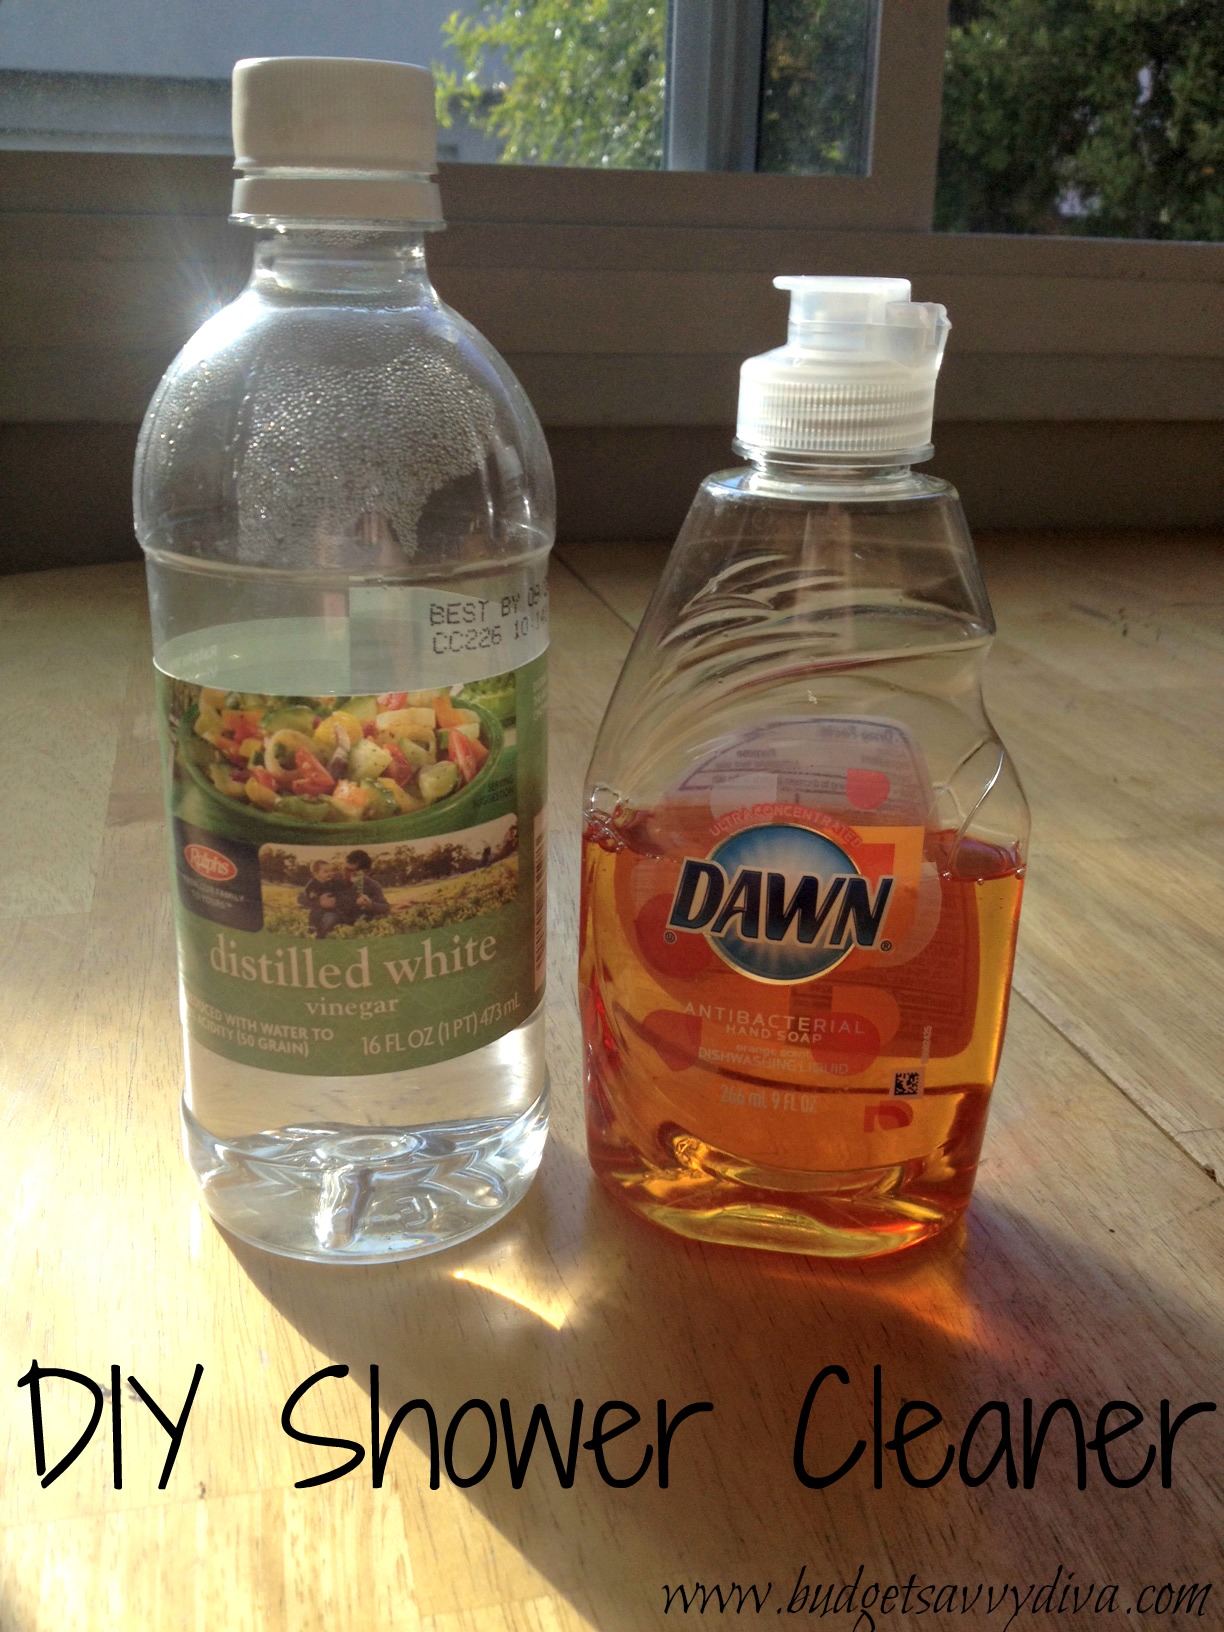 How to Make Homemade Shower Cleaner | Budget Savvy Diva